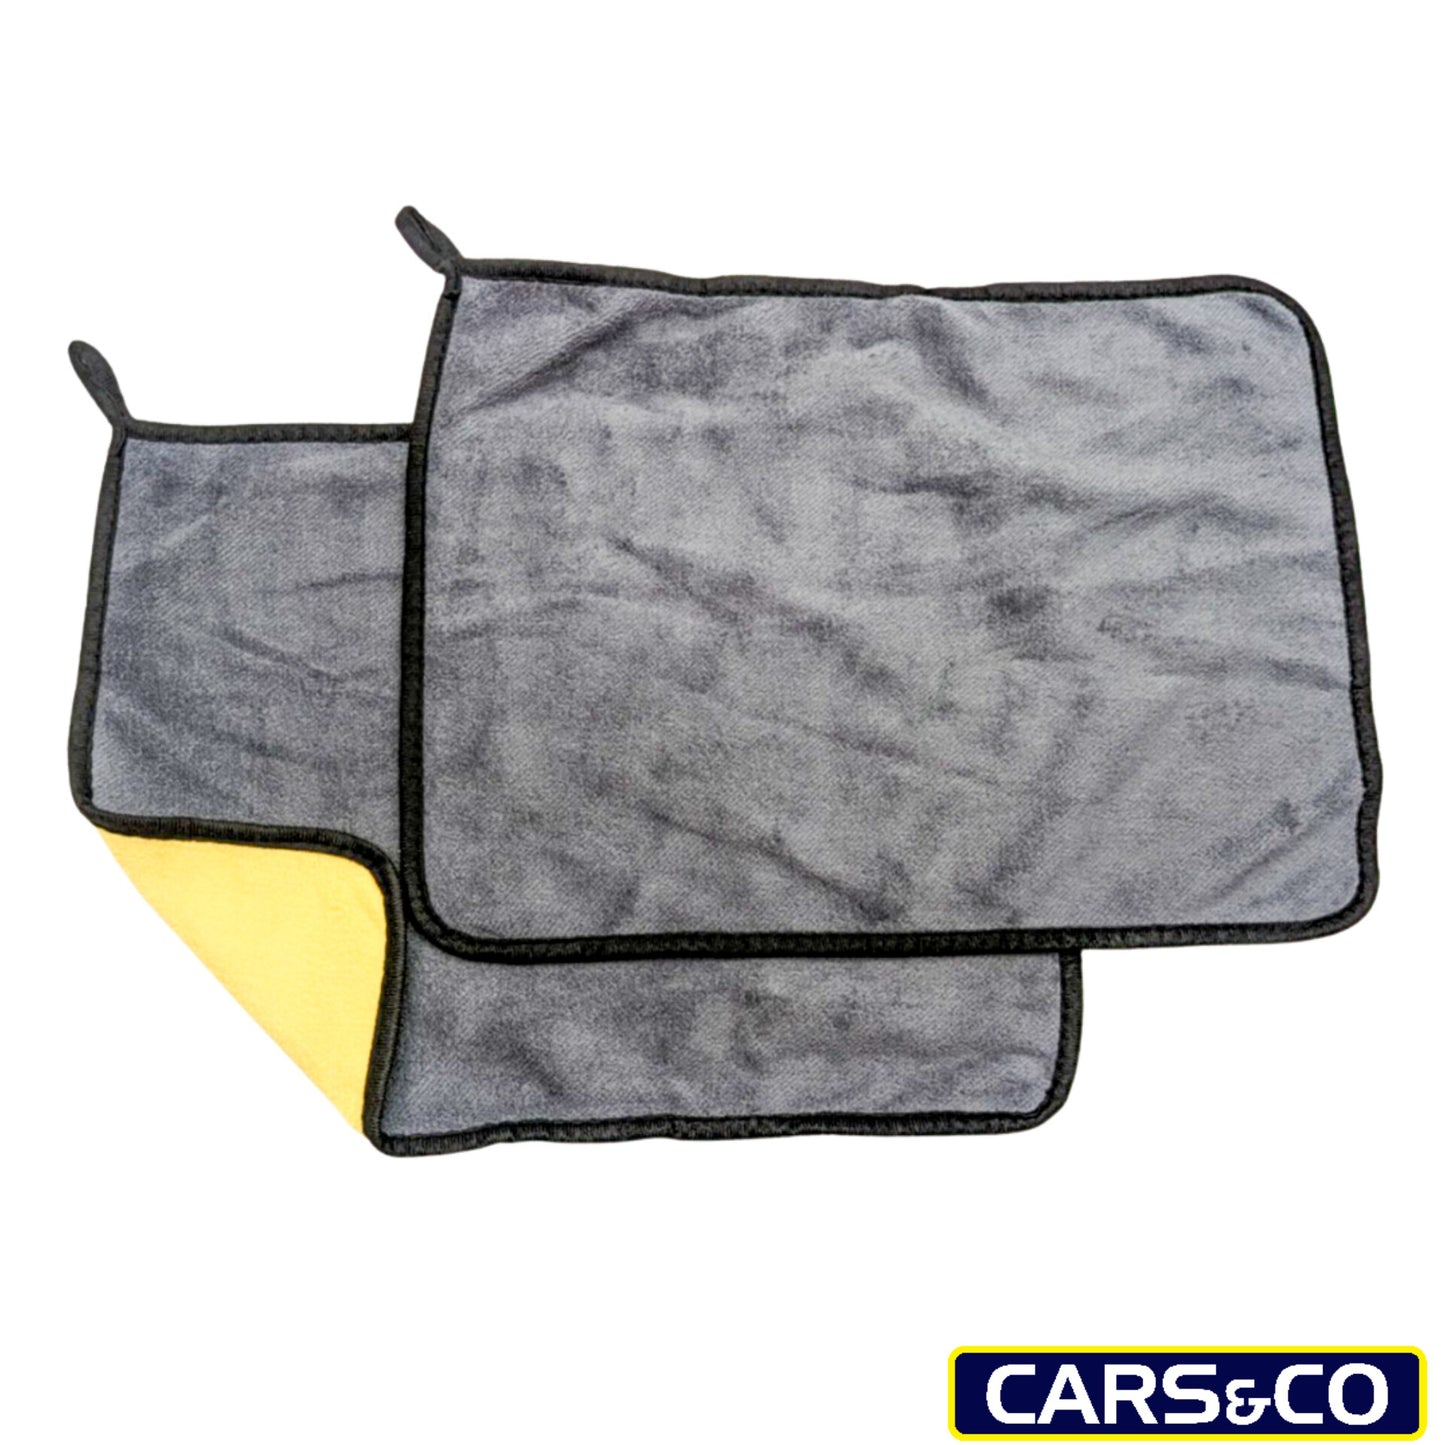 Microfiber Car Wash Towel Absorbent Car Supplies Cleaning Cloth